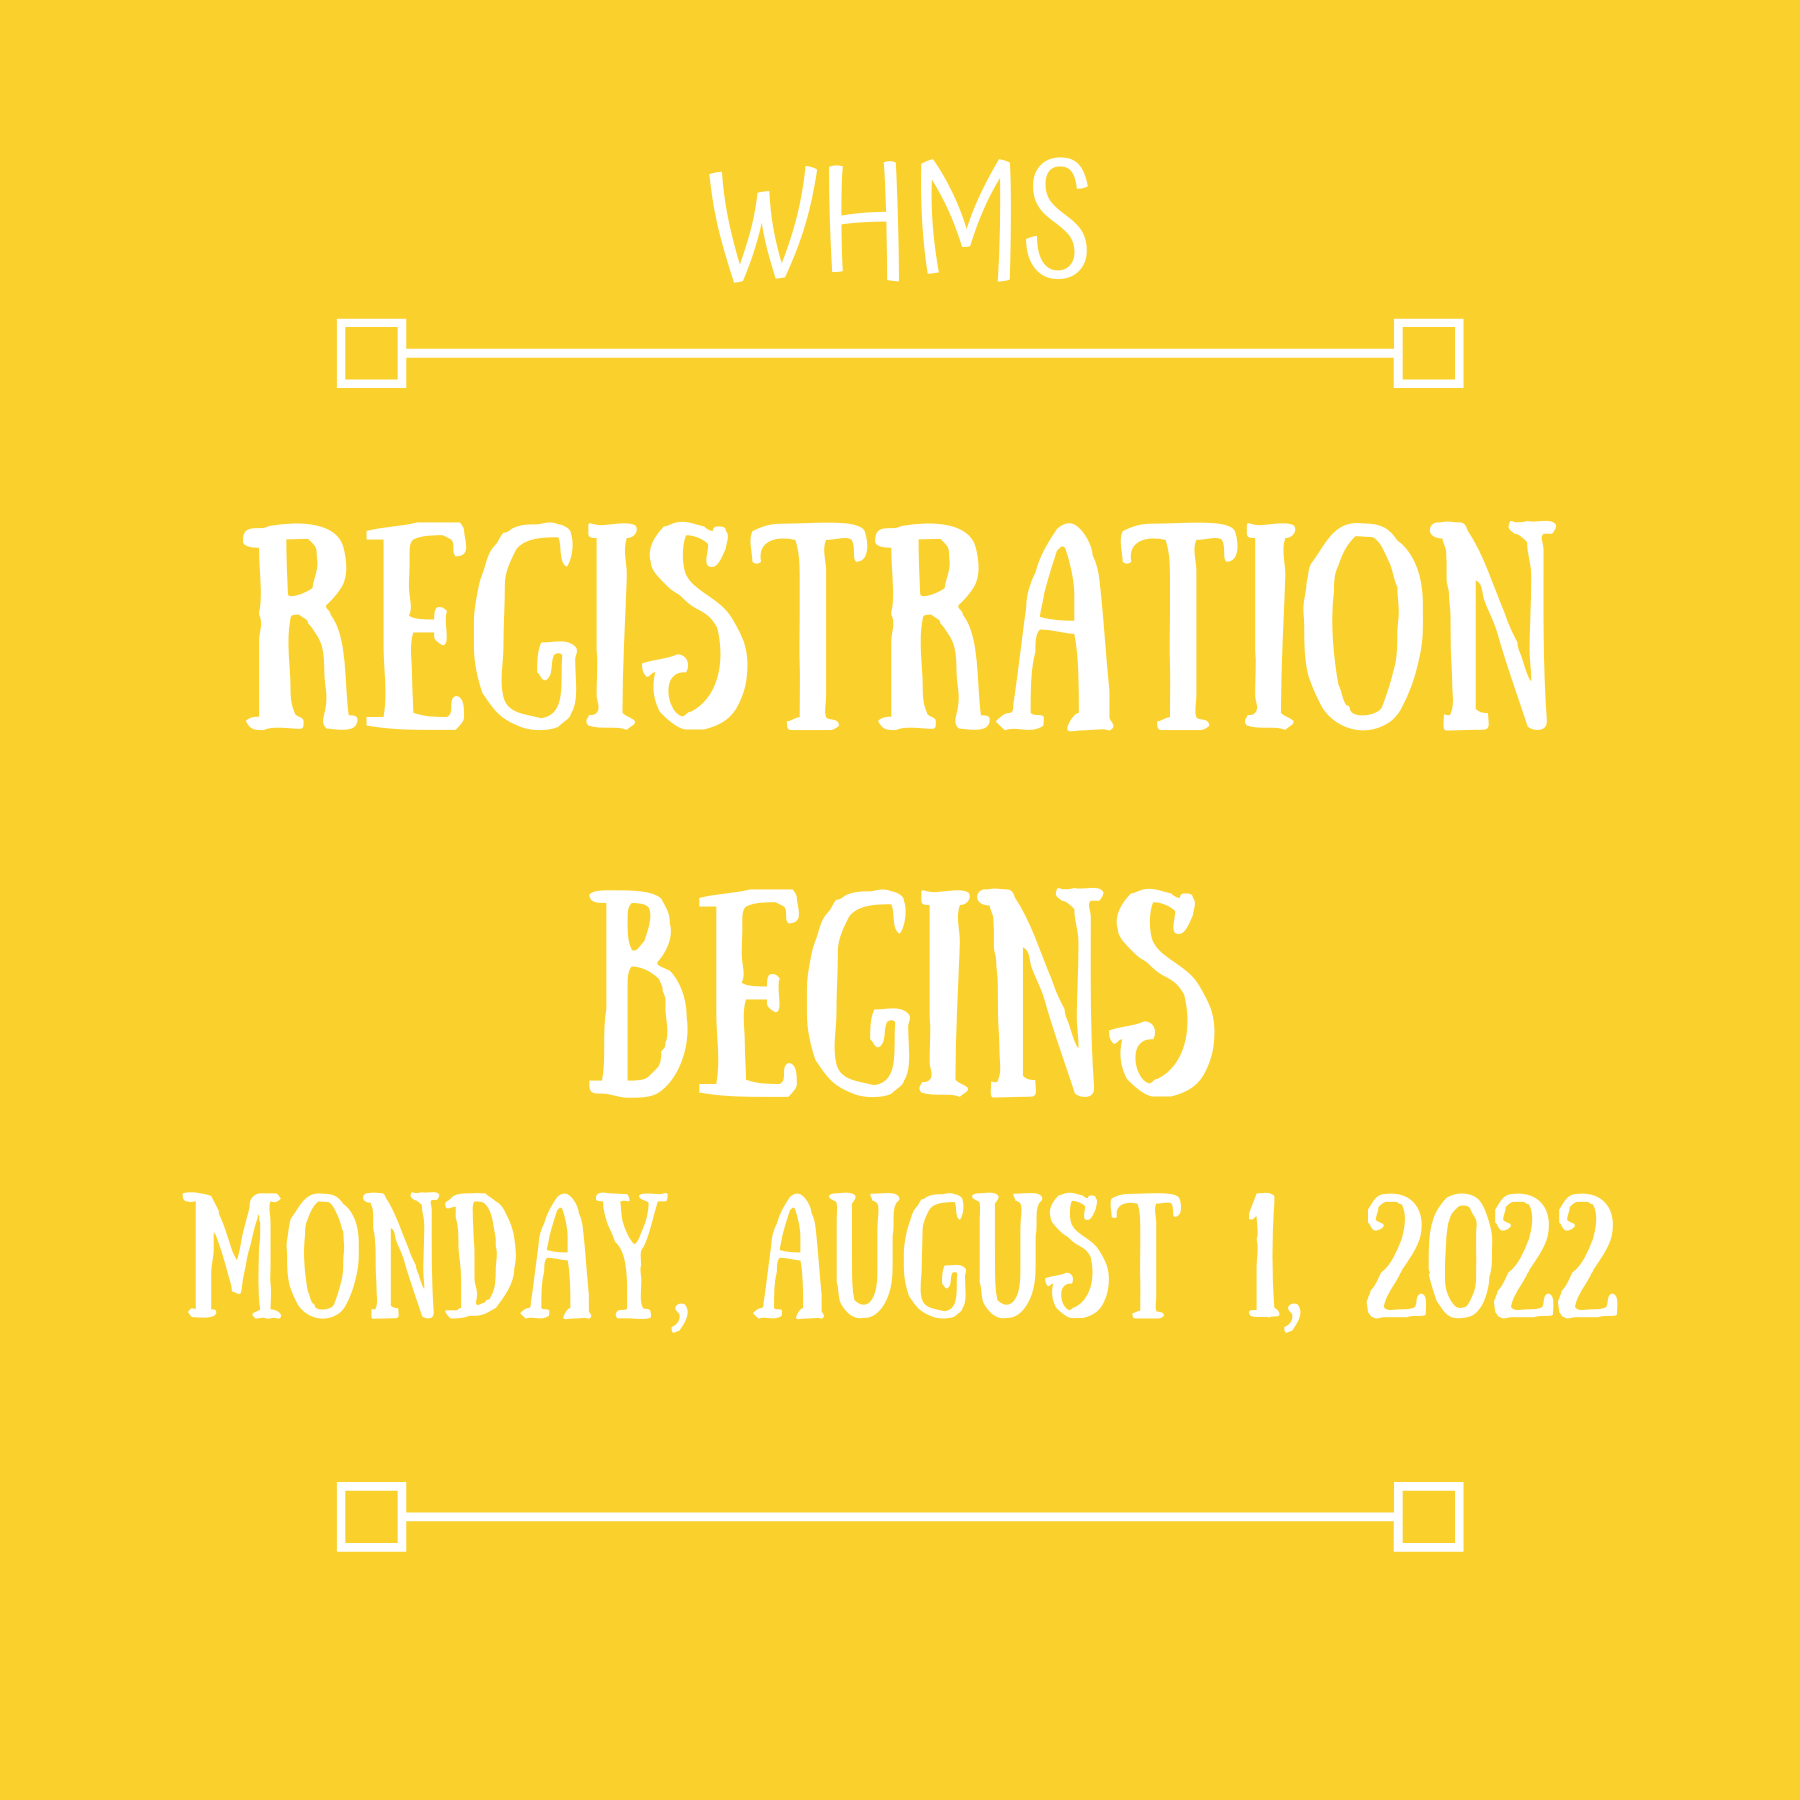 WHMS Registration begins Monday, August 1, 2022